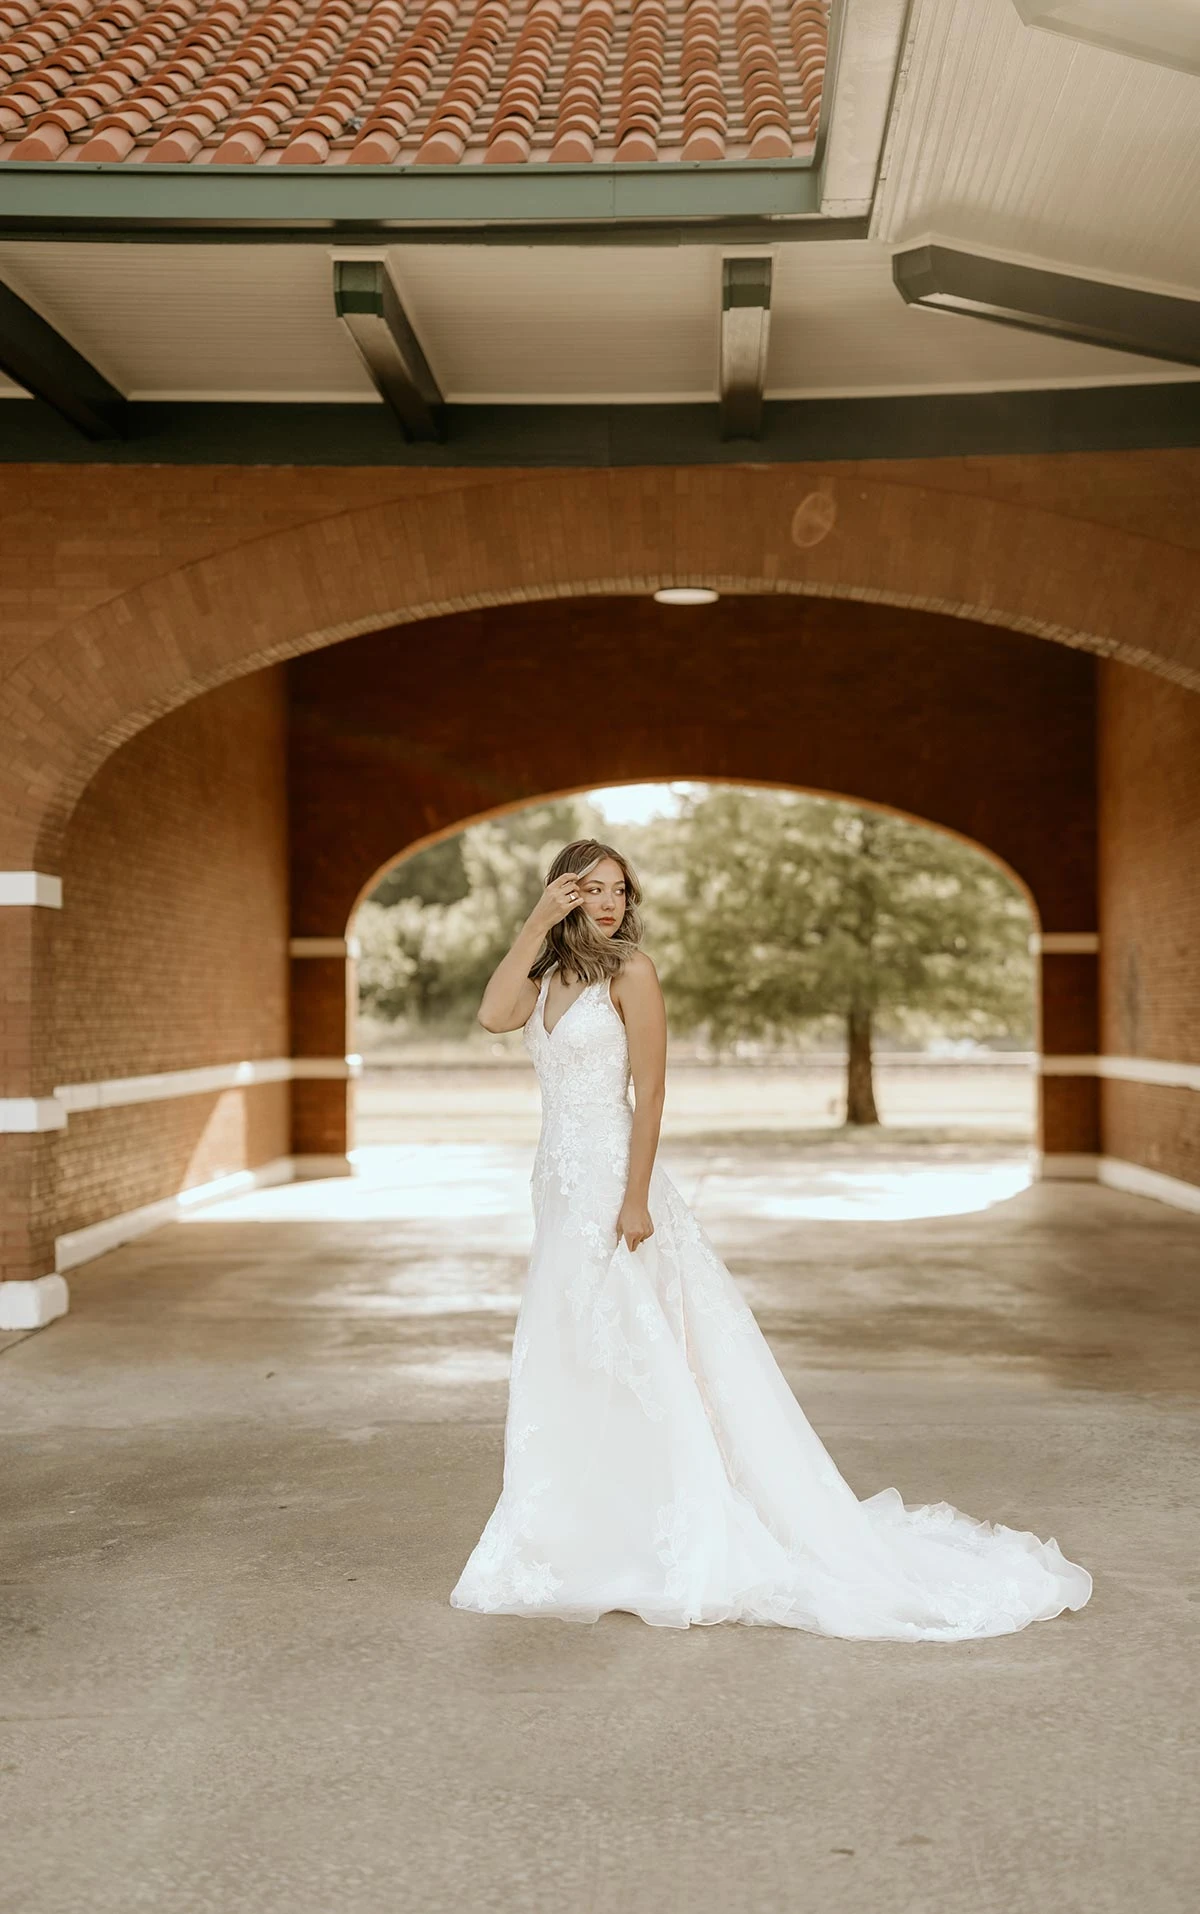 d3654 Simple Lace A-Line Wedding Dress with Shoulder Straps  by Essense of Australia